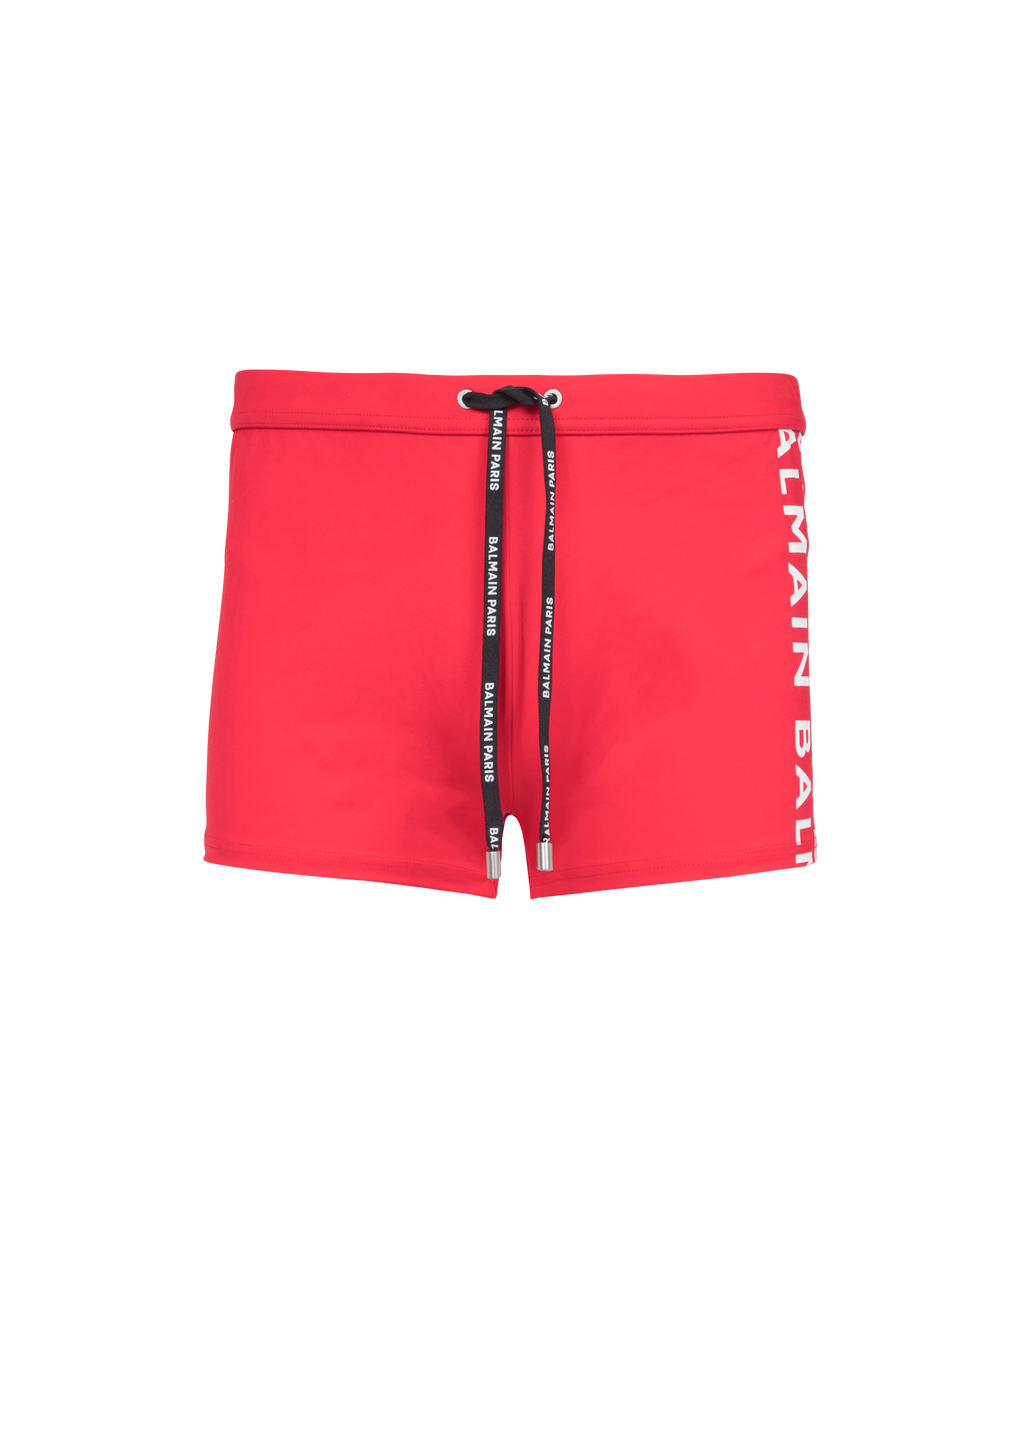 Balmain logo swimming trunks, red, hi-res